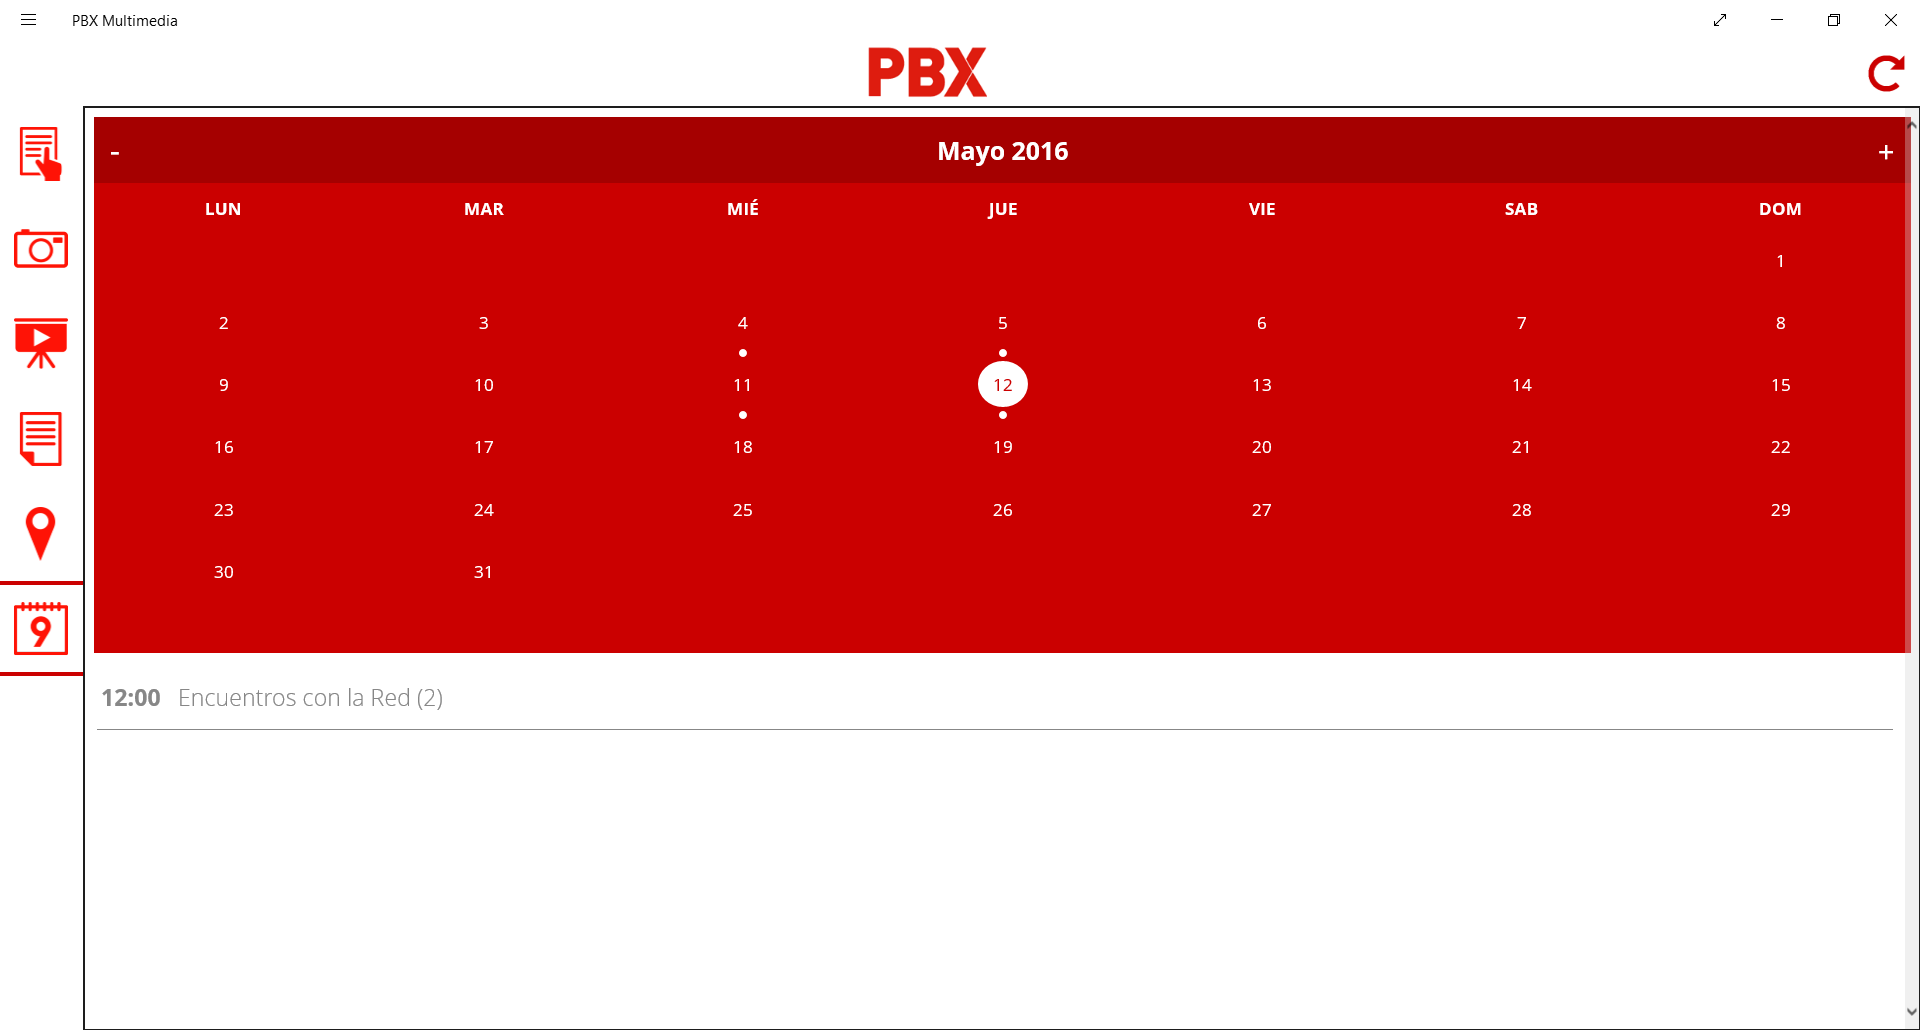 PBX Multimedia